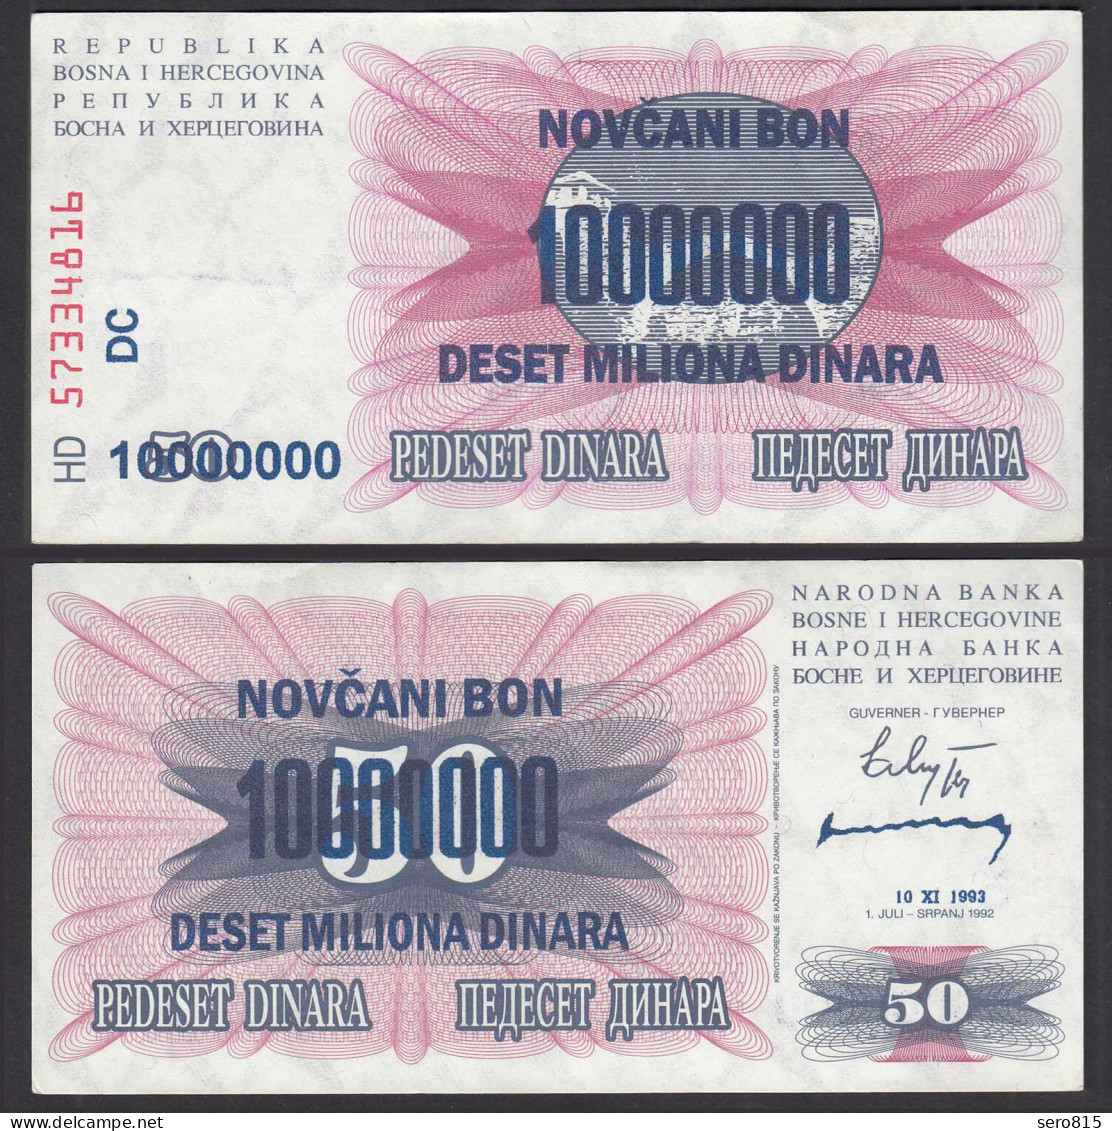 BOSNIEN - HERZEGOWINA - 10-Million Dinara 10.11.1993 Pick 36 XF (2)    (29911 - Bosnien-Herzegowina